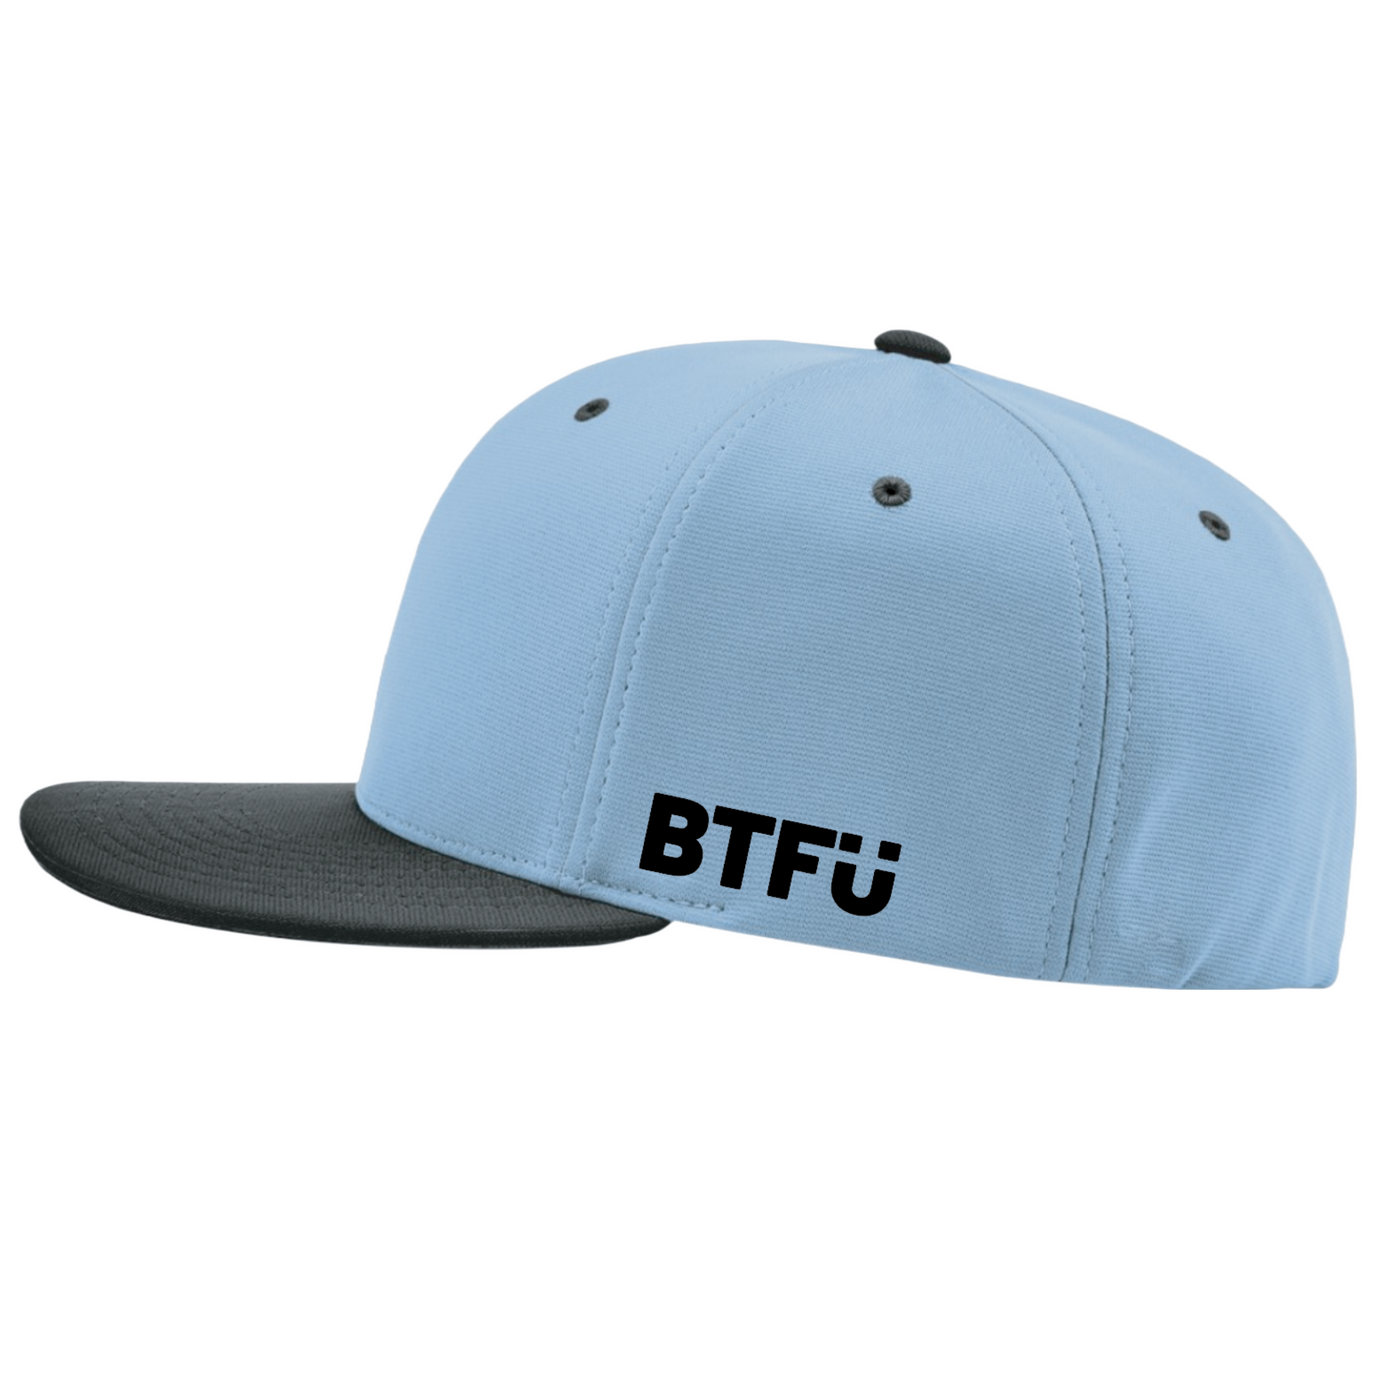 BWR Flat Brim Hat